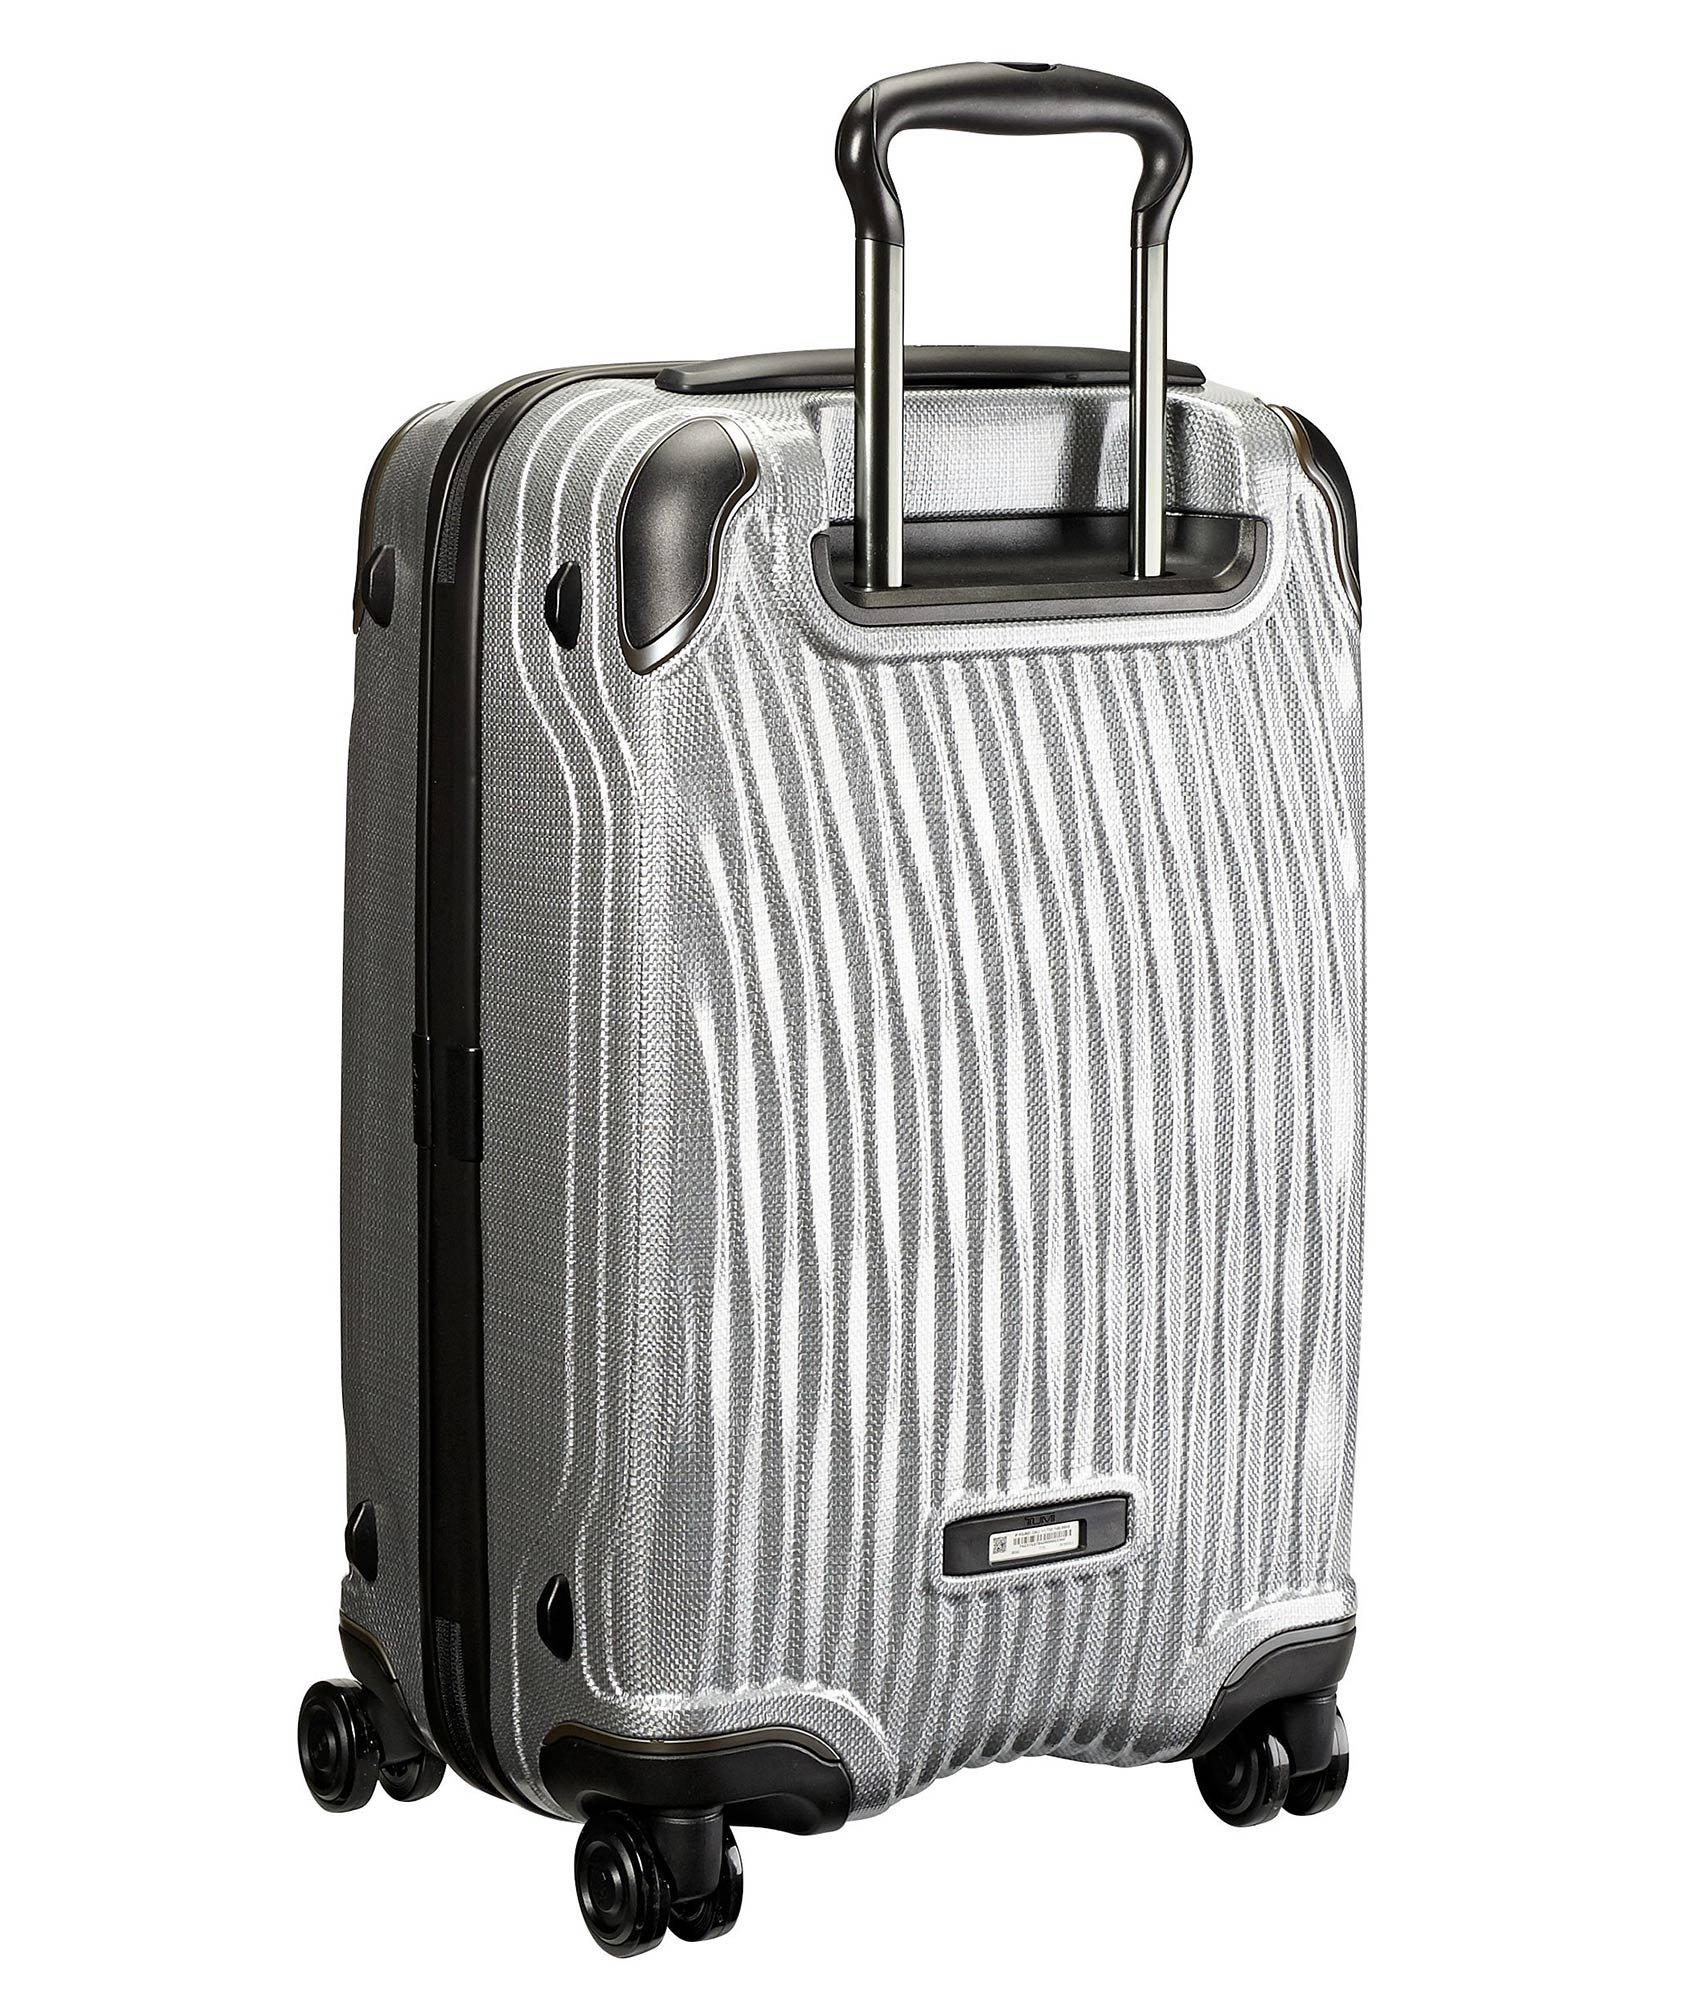 International Carry-On Suitcase image 1